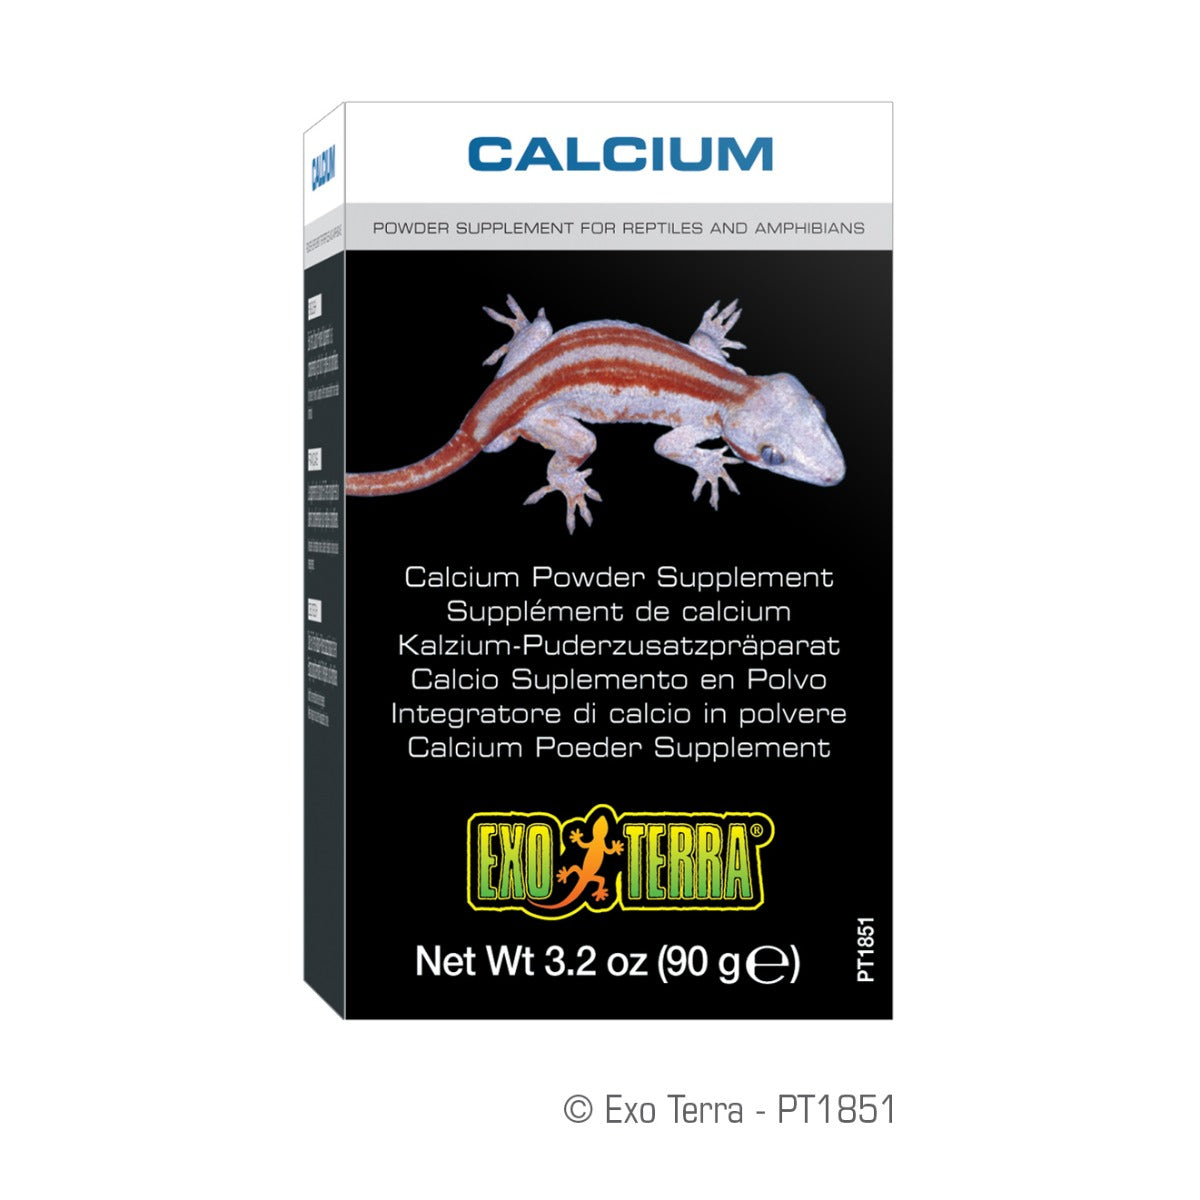 Exo Terra Calcium Powder Supplement - 3.2 oz - 90 g